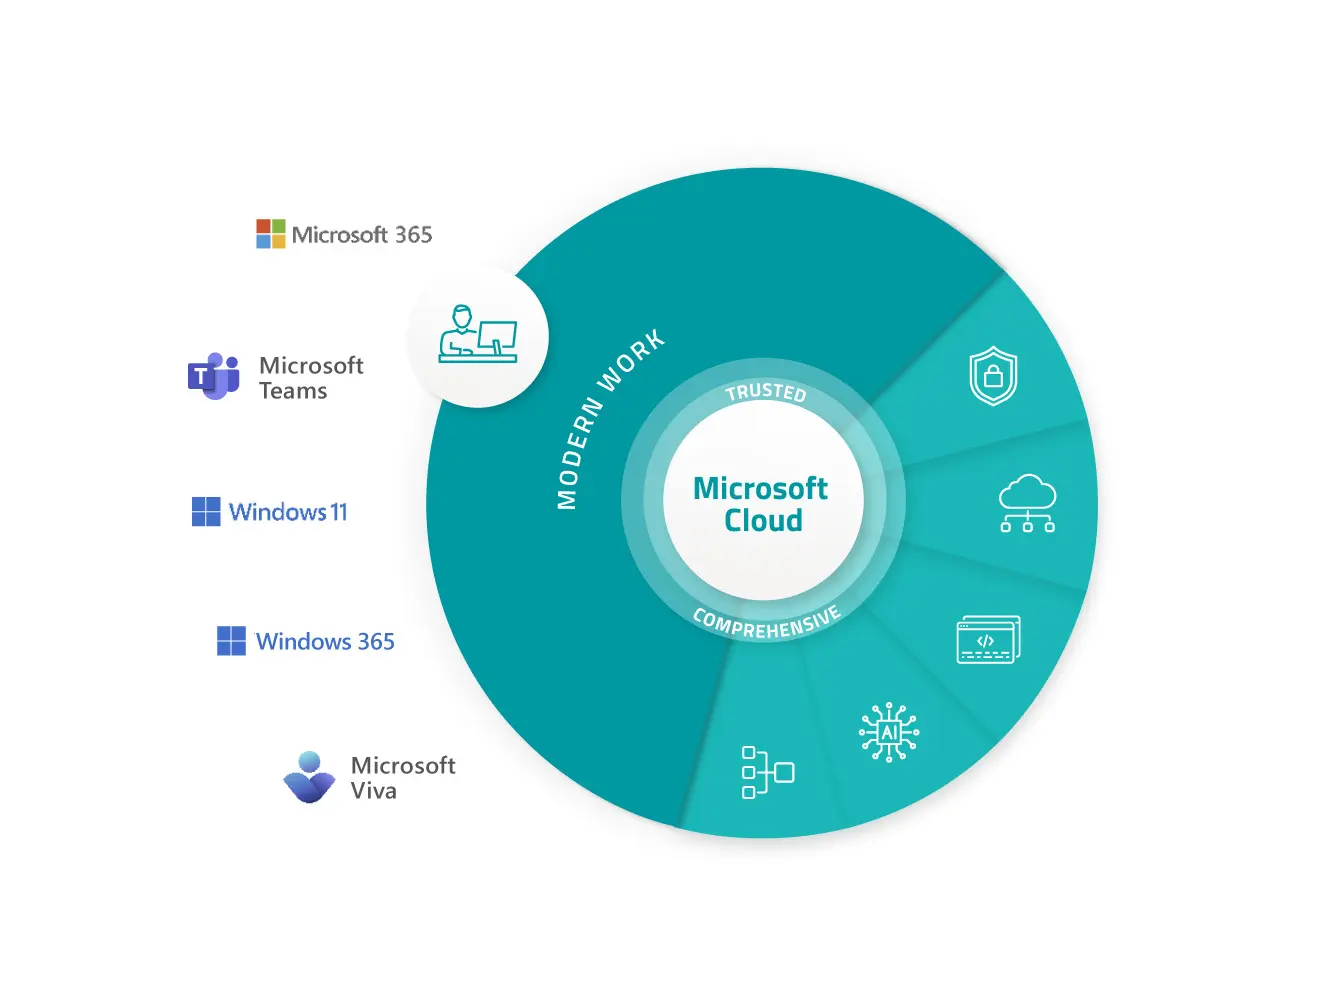 Modern work solutions within Microsoft Cloud, showcasing Microsoft 365, Teams, Windows 11, Windows 365, & Viva.